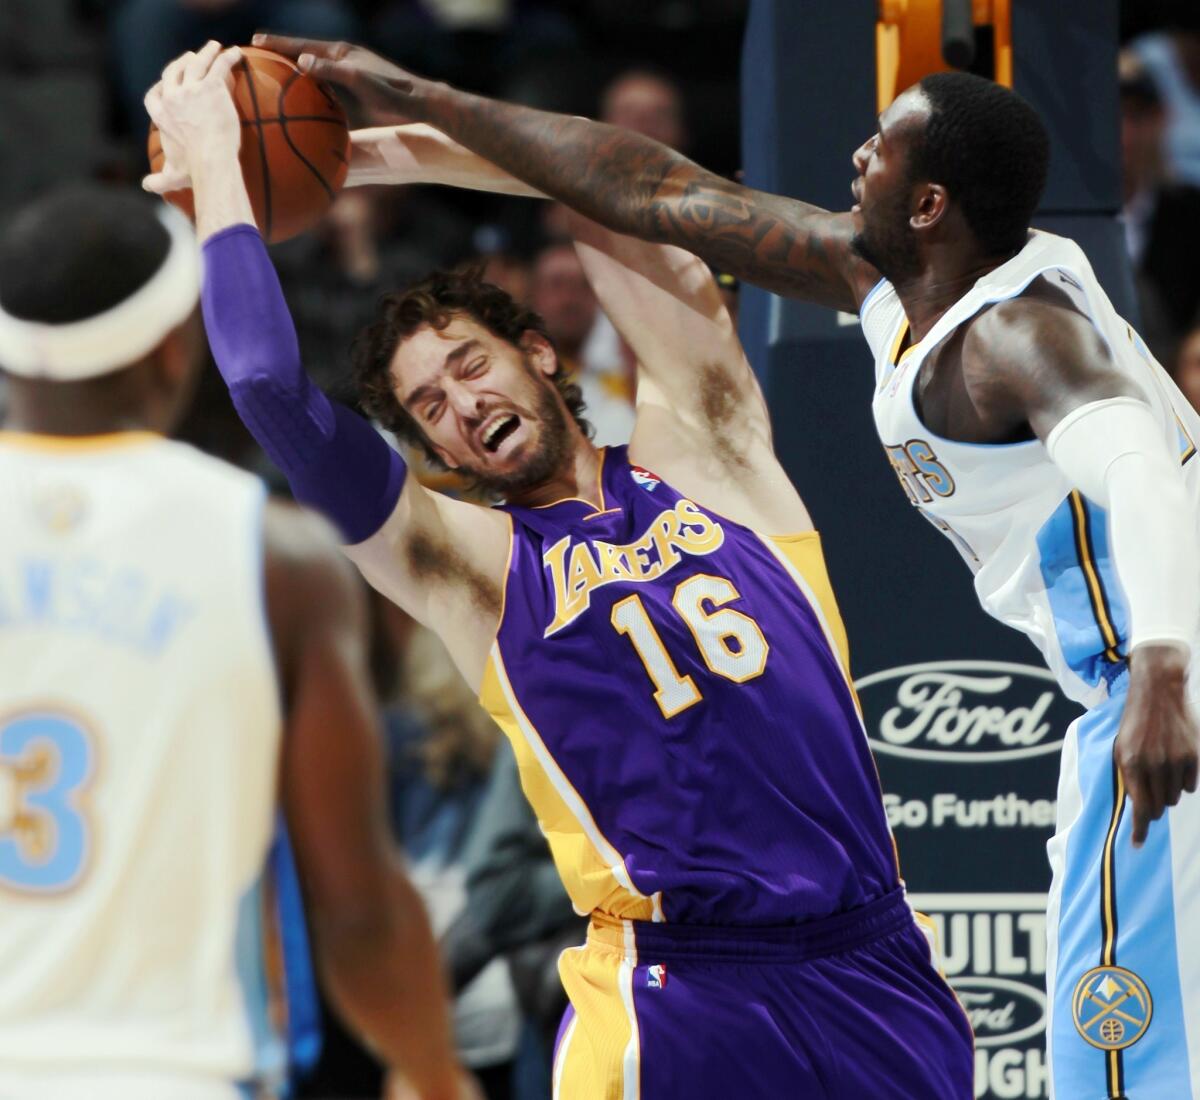 Lakers power forward Pau Gasol pulls a rebound away from Nuggets forward Jordan Hamilton in the first quarter Wednesday night in Denver.